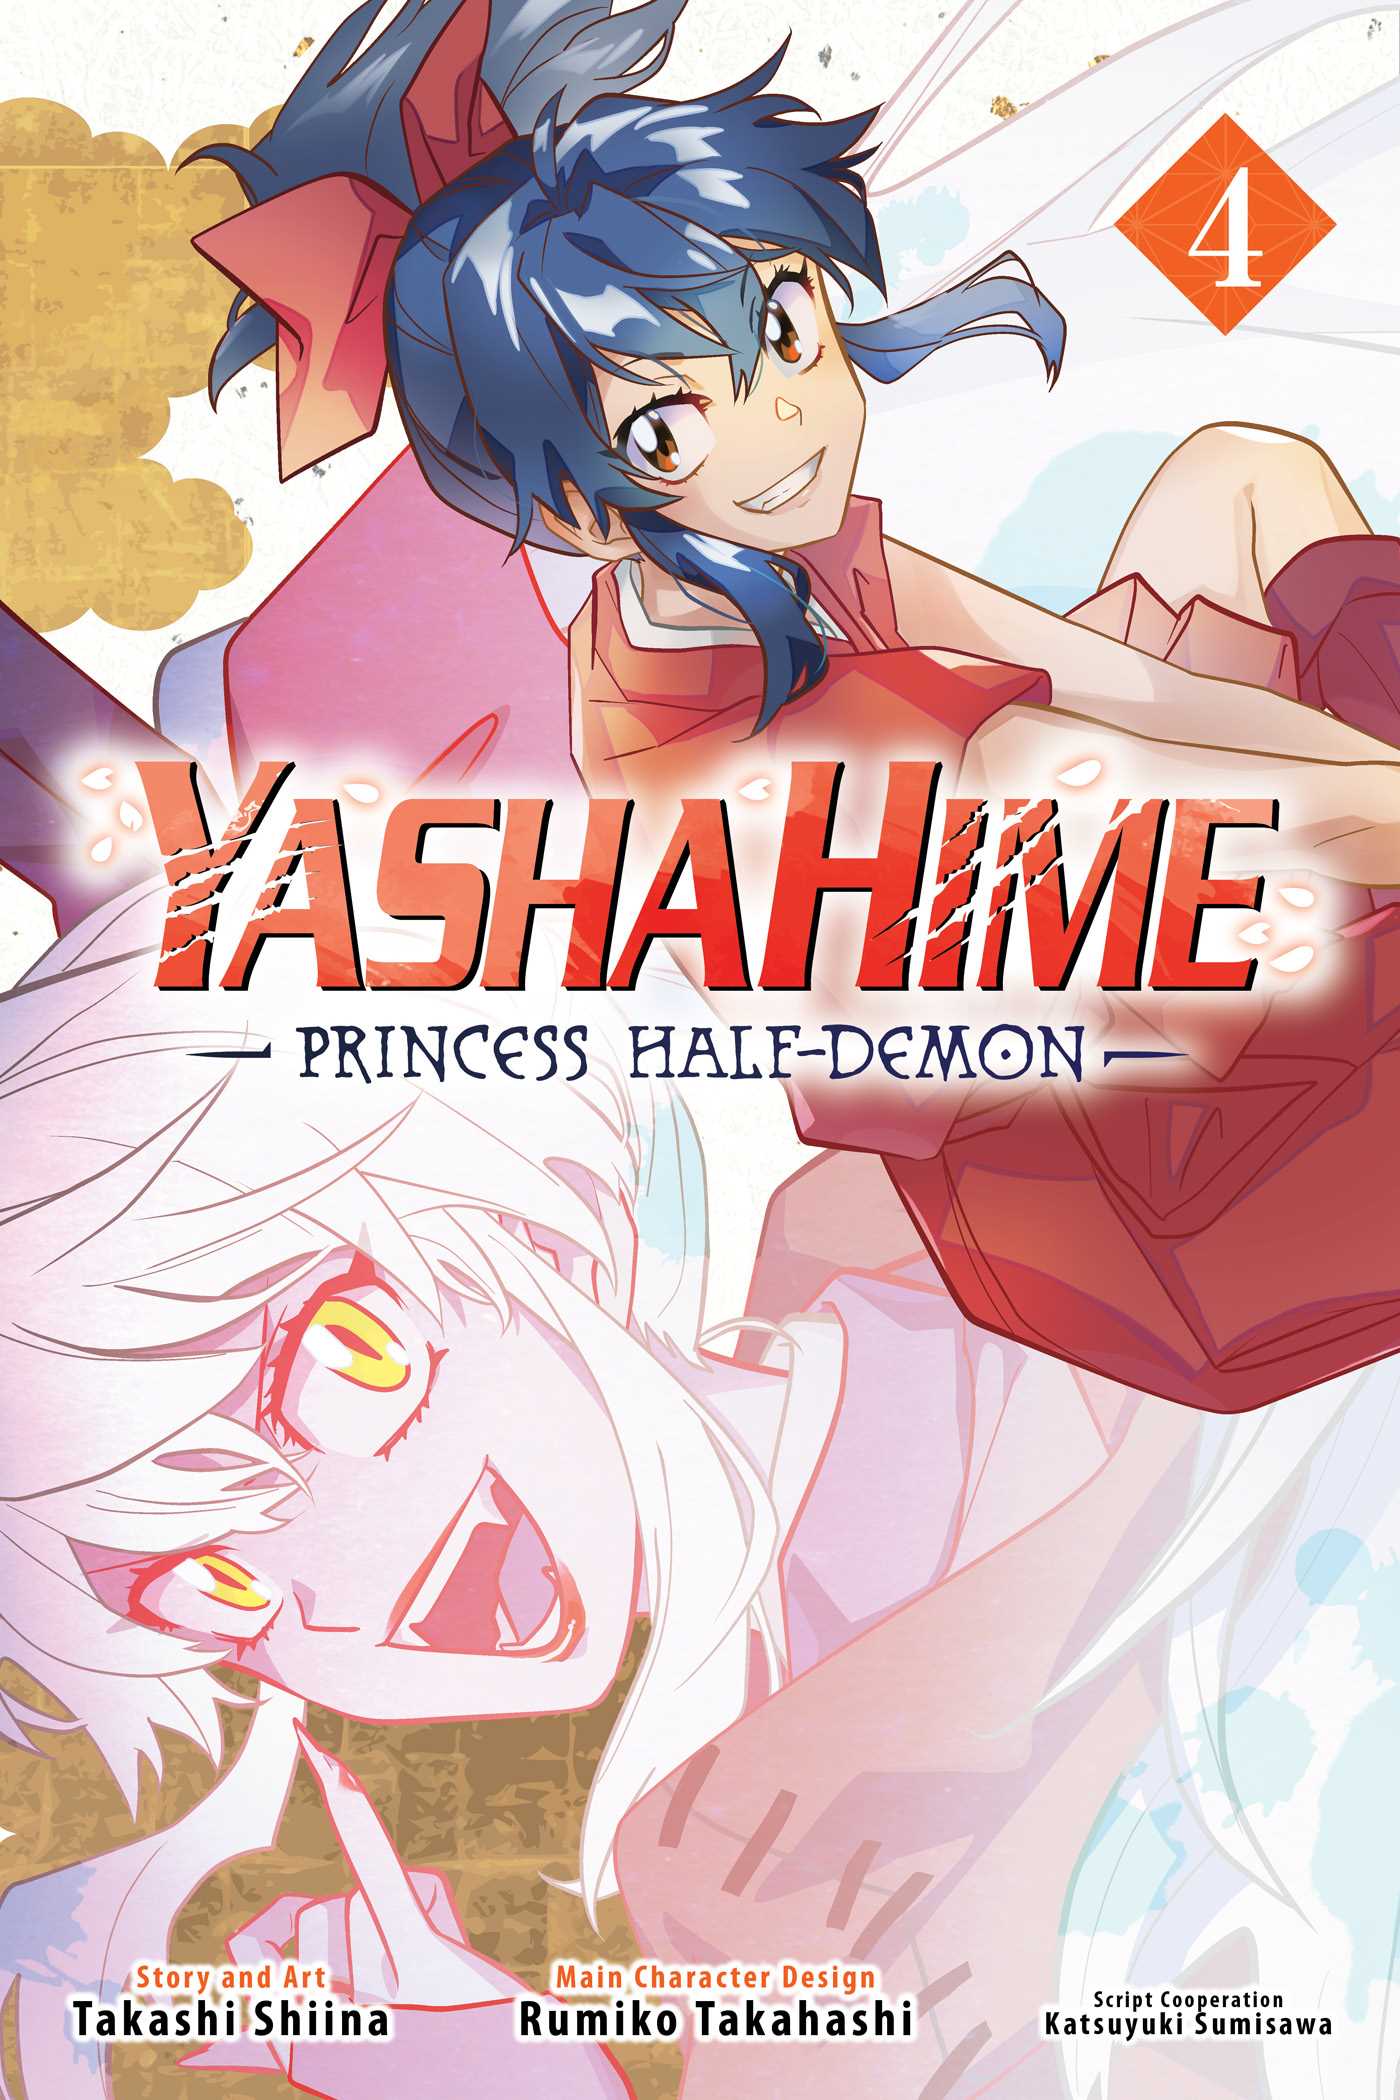 Yashahime: Princess Half-Demon, Vol. 4 **Pre-Order**